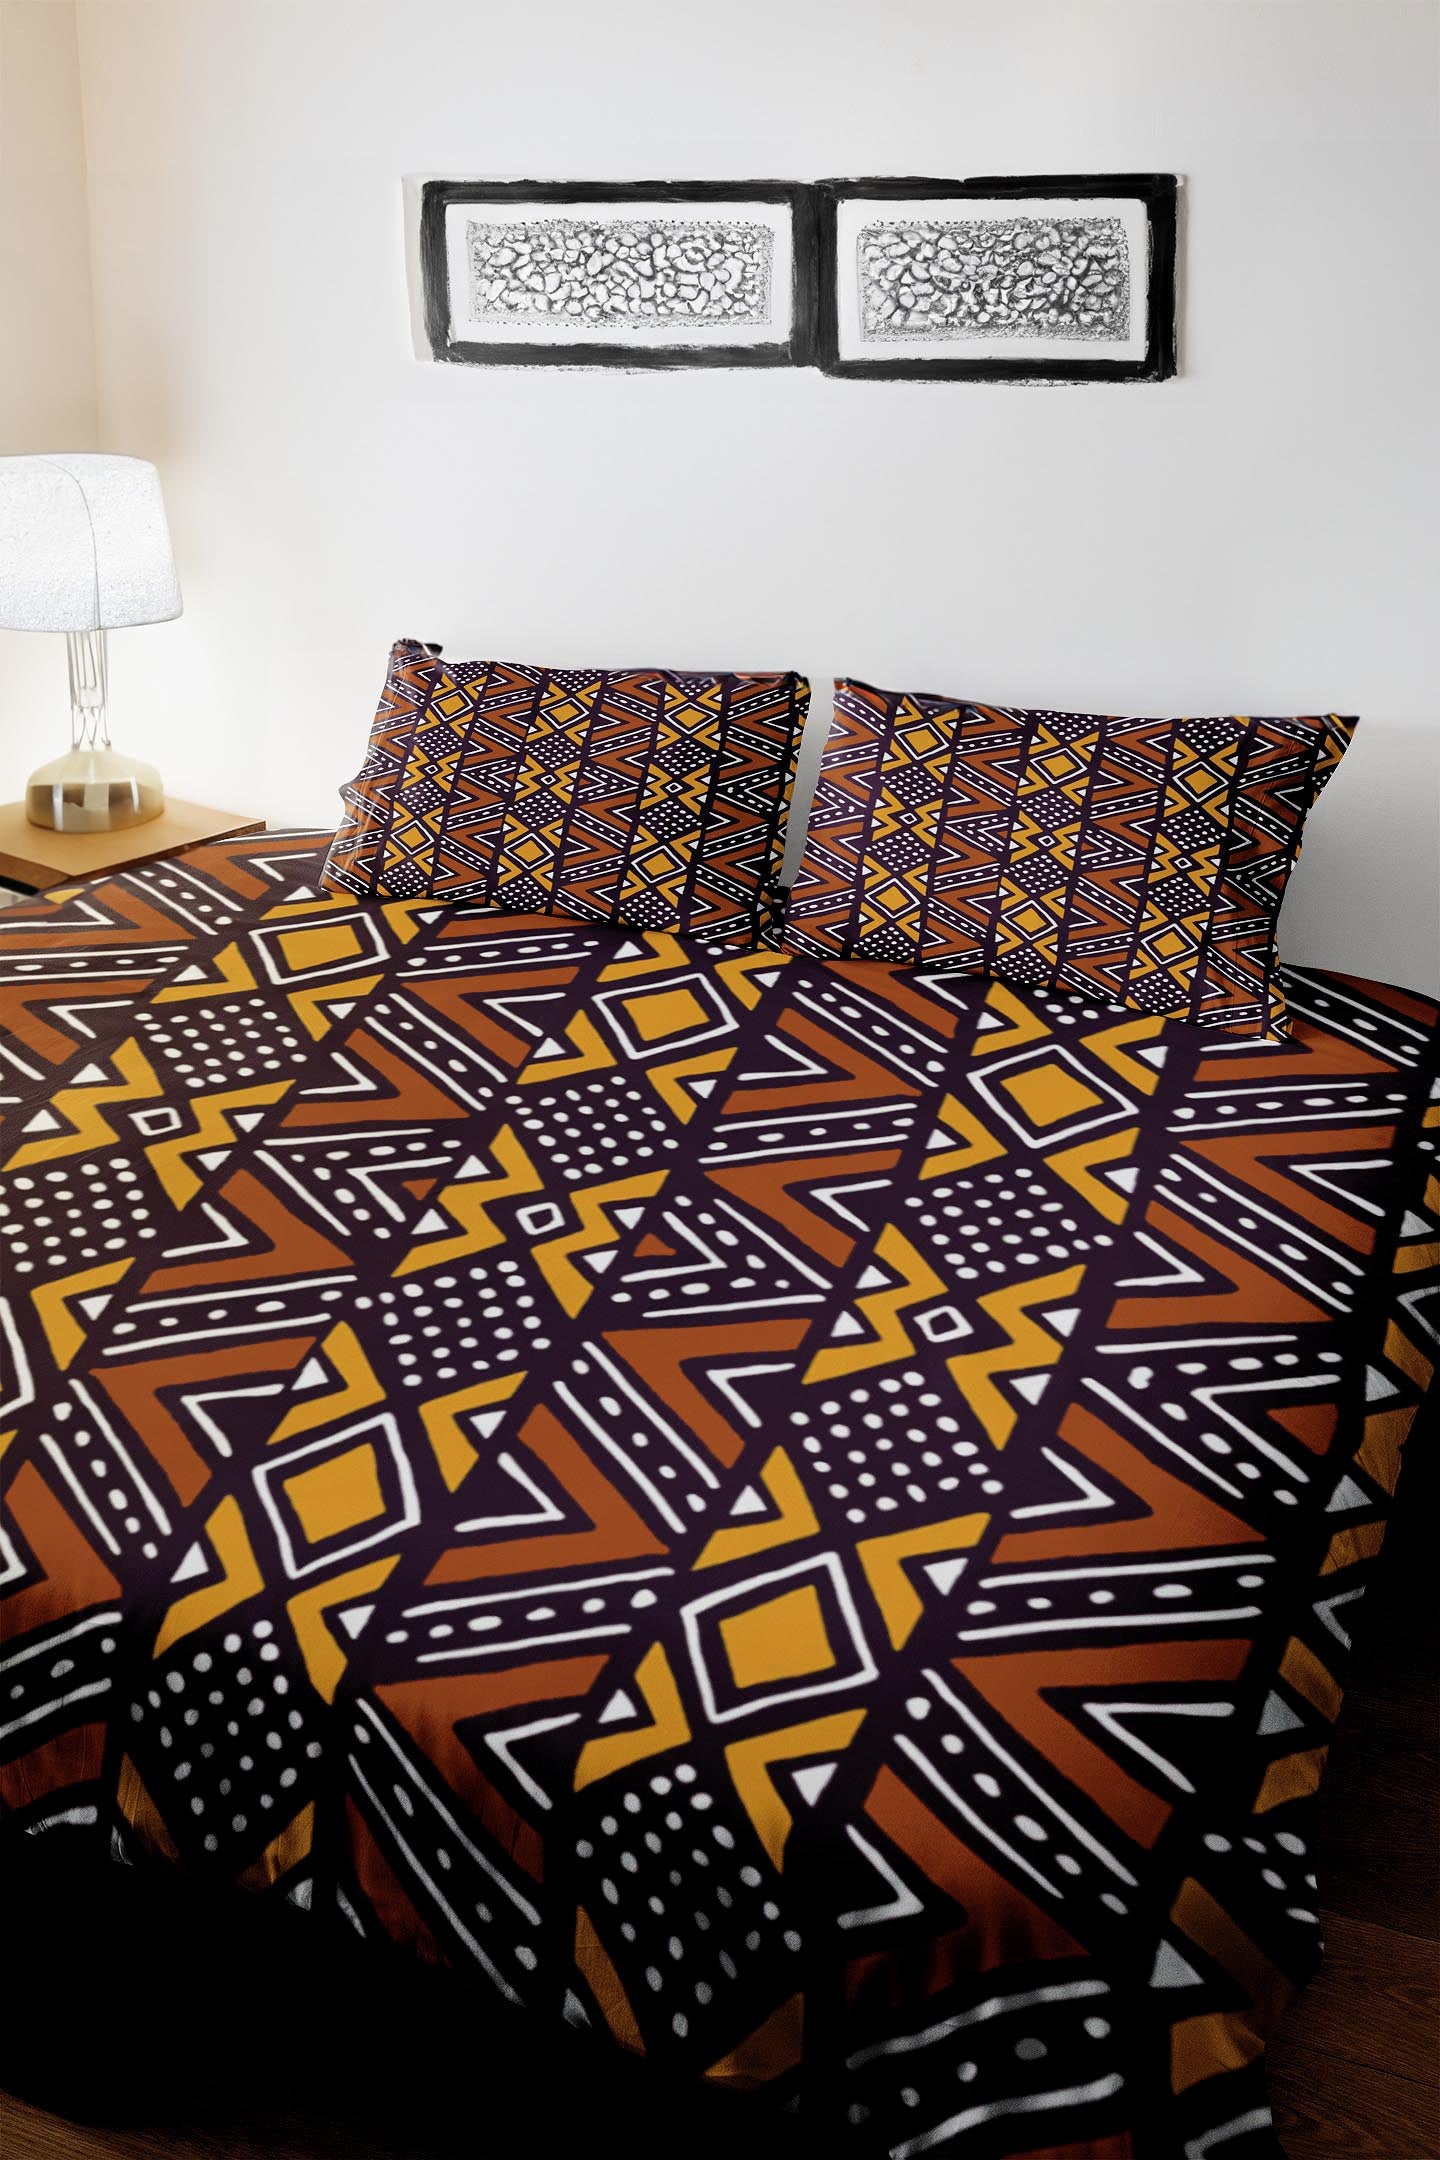 3-Piece African Bedding: Duvet & Pillow Cases Artistry - Bynelo